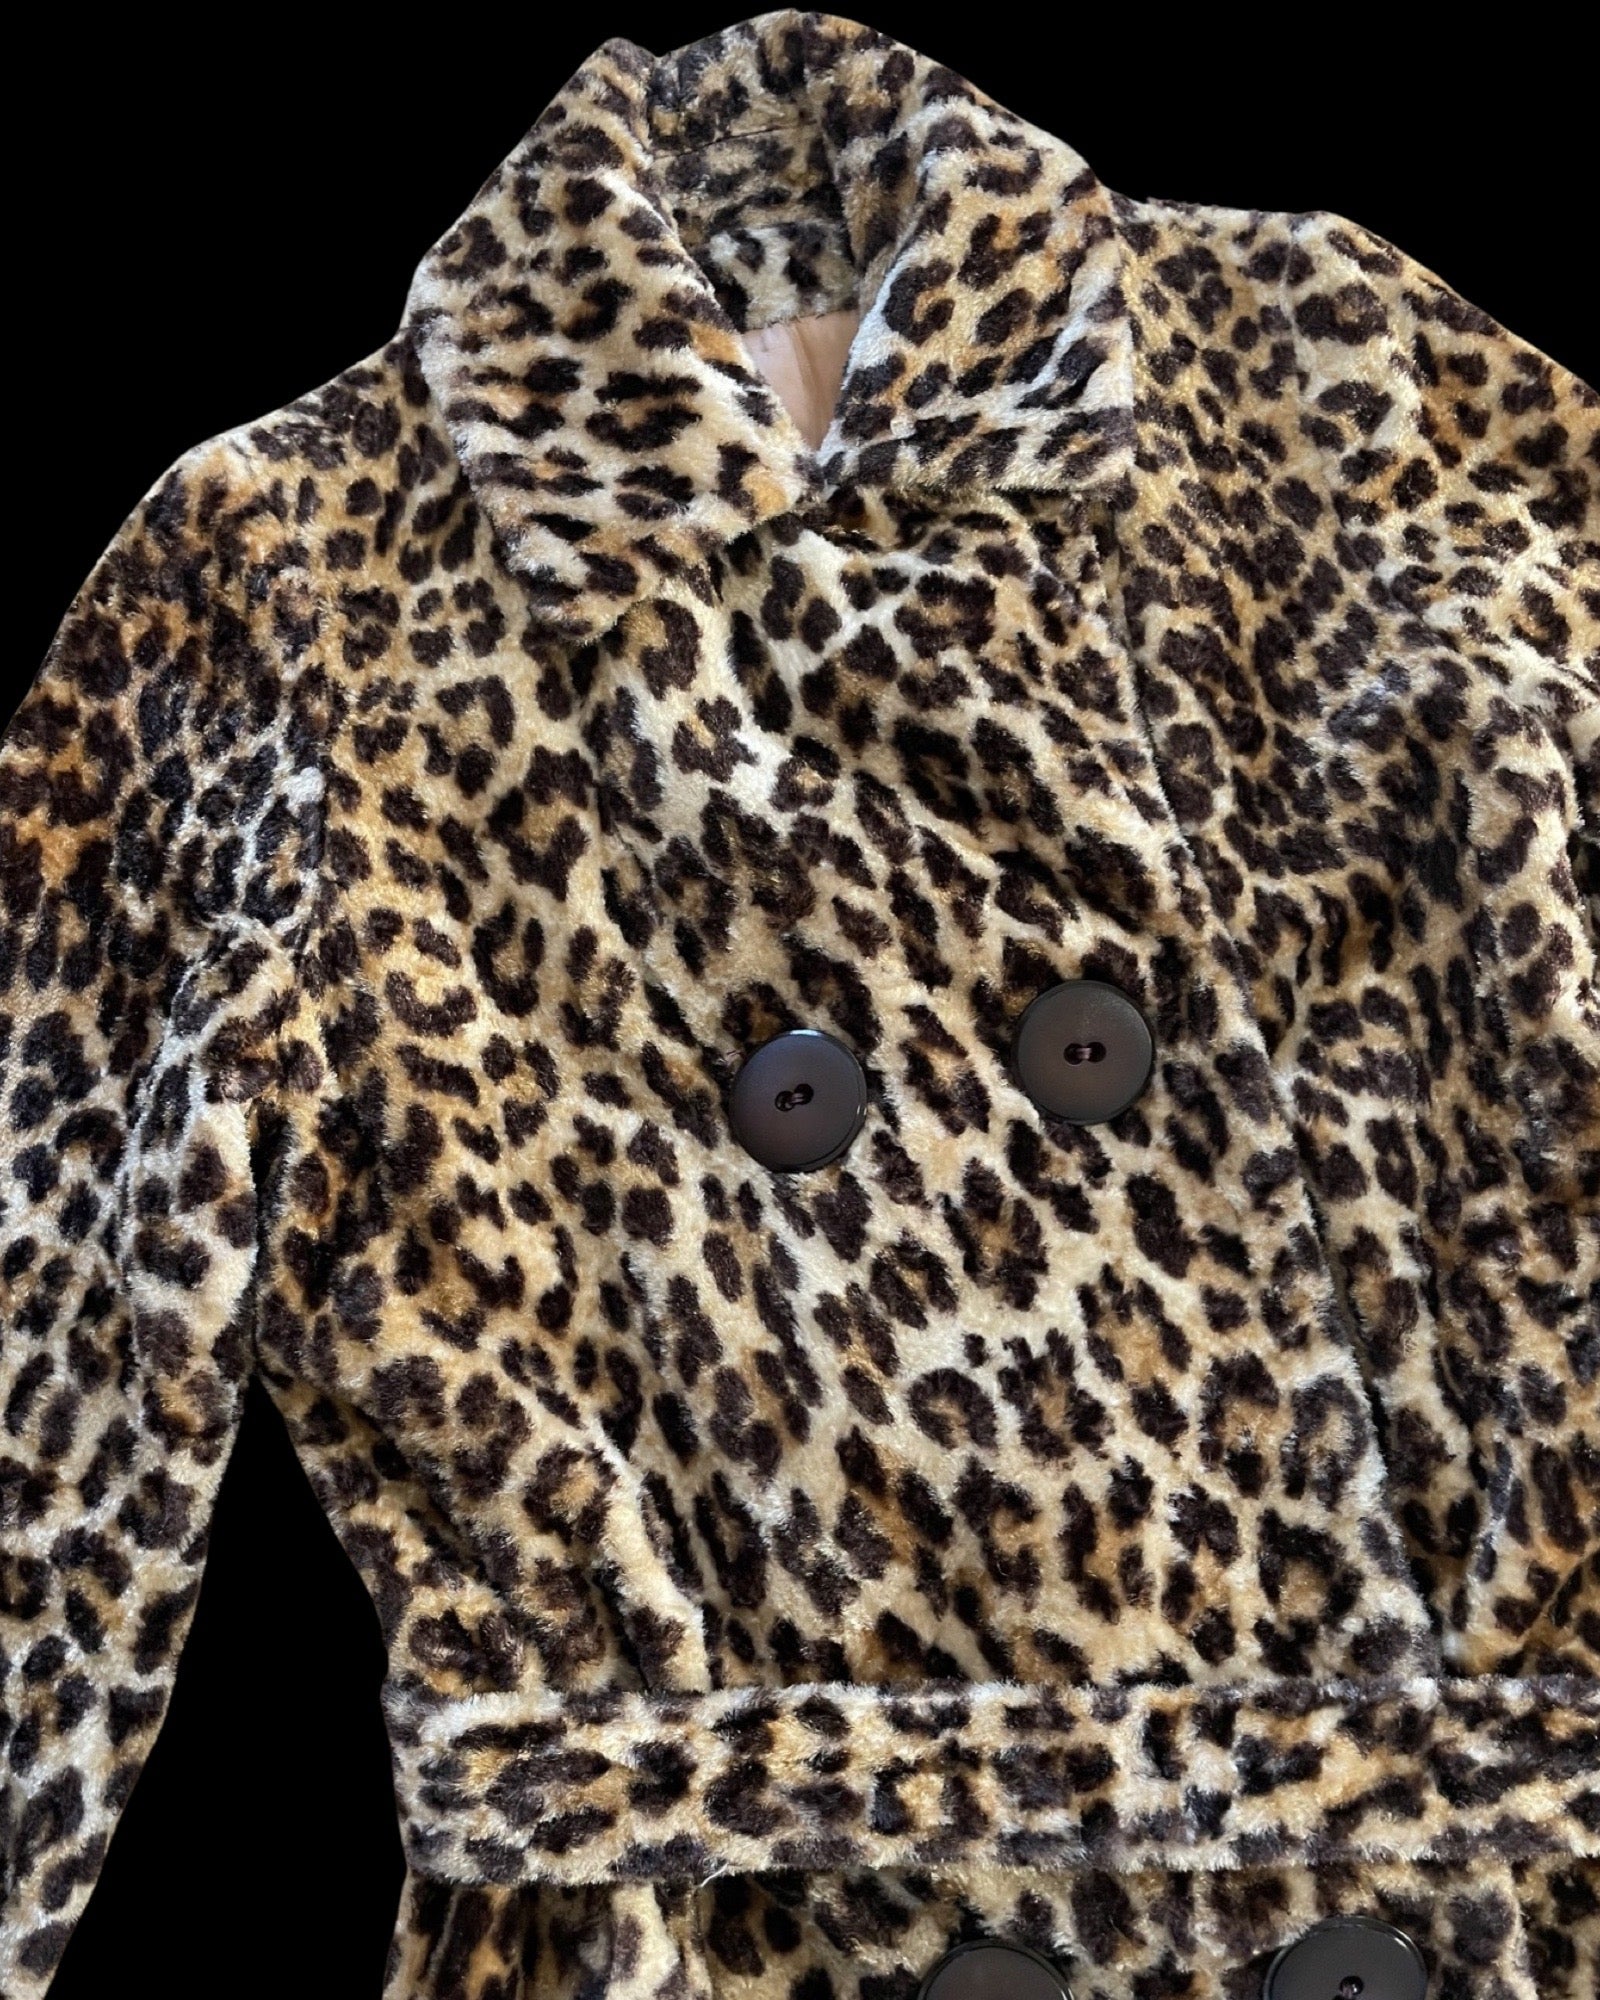 1960s/1970s Joseph Magnin Faux Cheetah Print Plush Loop Double Breasted Coat